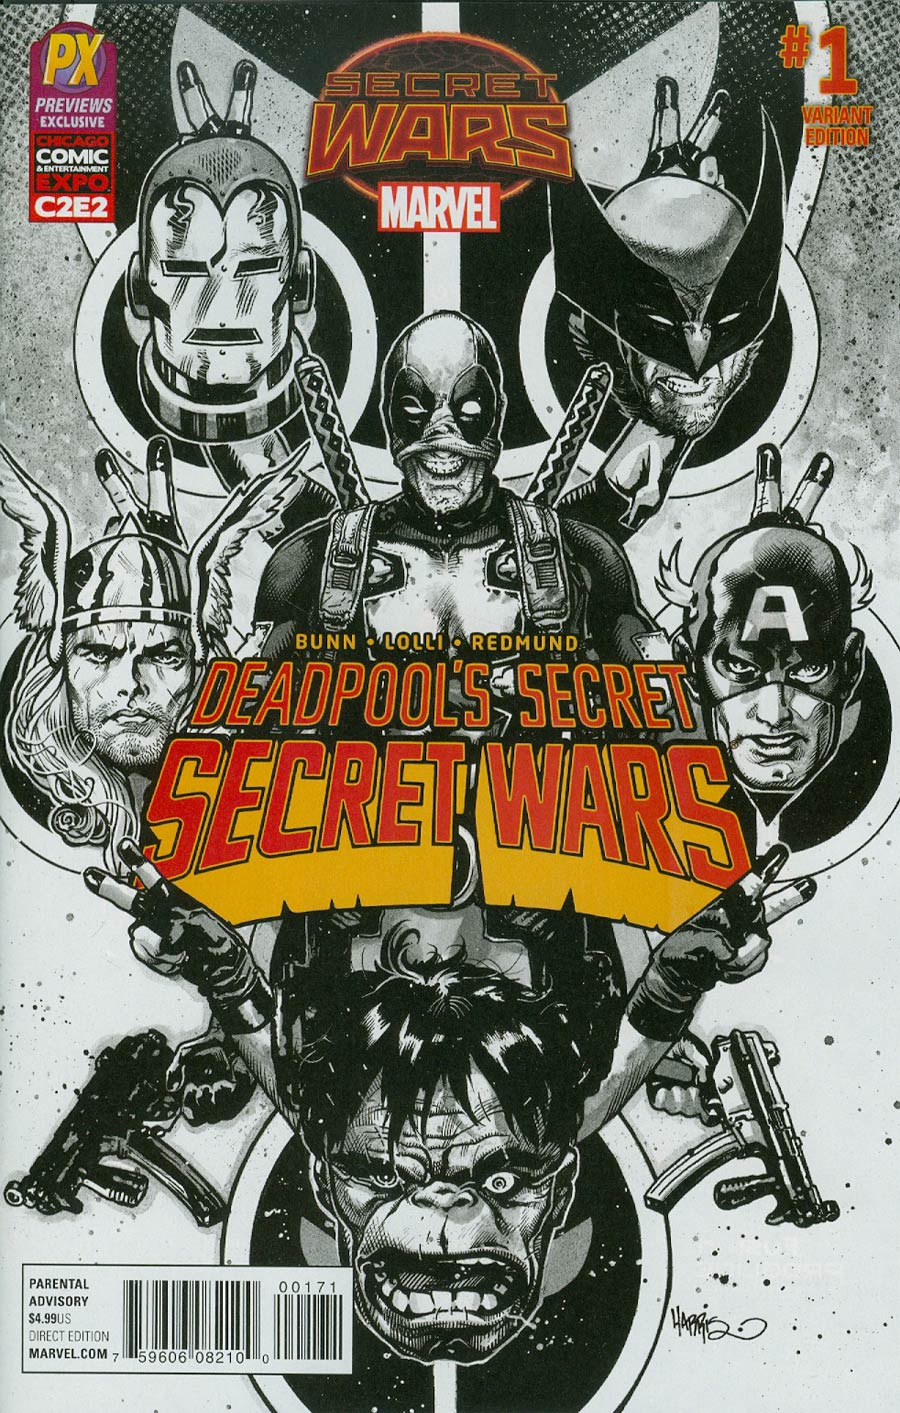 Deadpools Secret Secret Wars #1 Cover I C2E2 Previews Exclusive Inked Variant Cover (Secret Wars Warzones Tie-In)